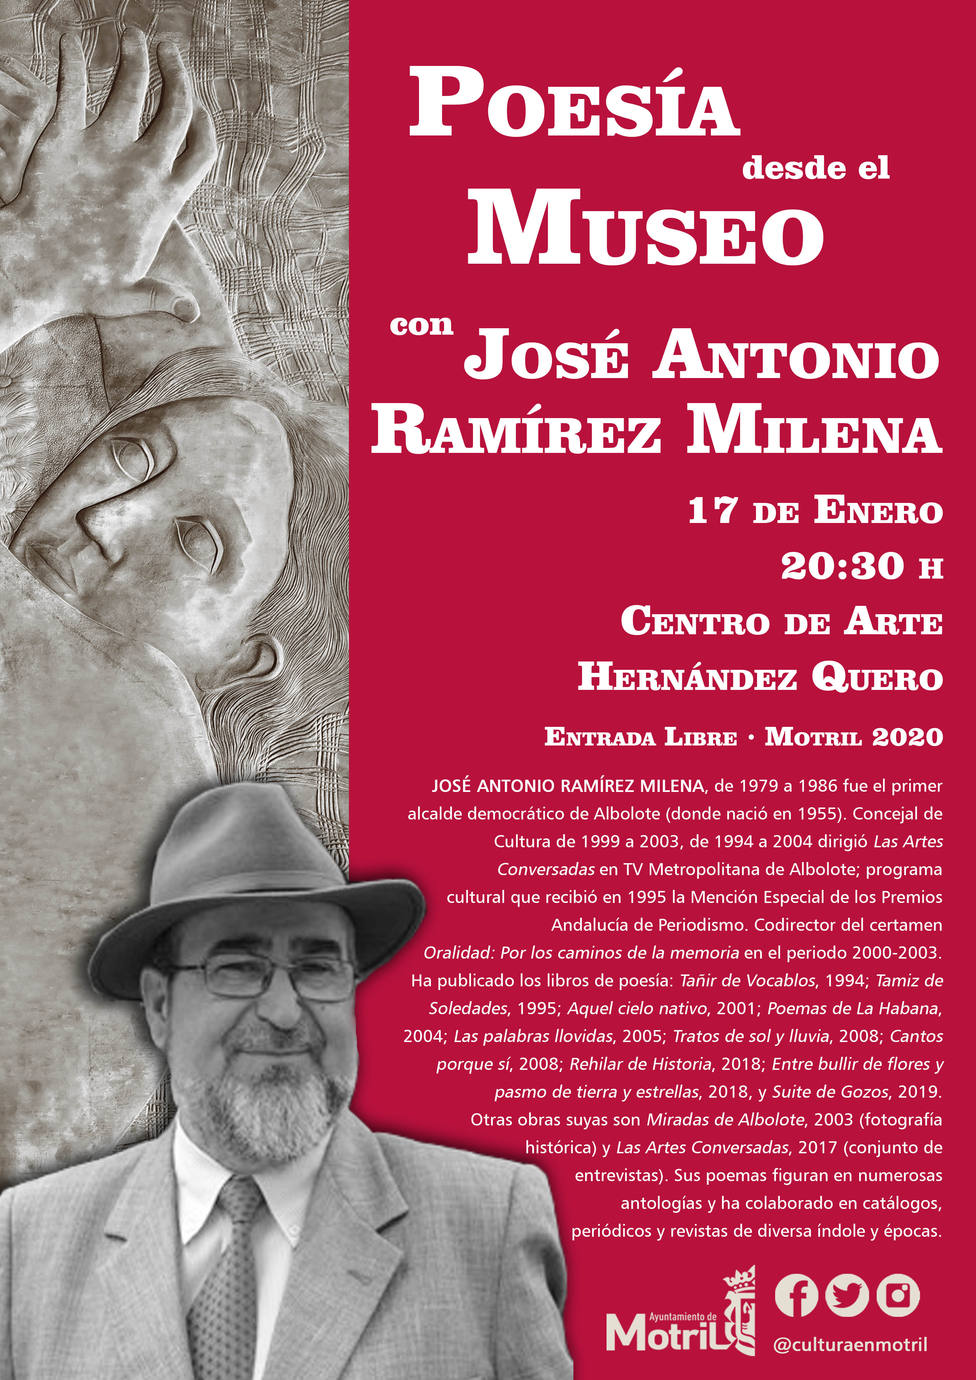 José Antonio Ramírez Milena